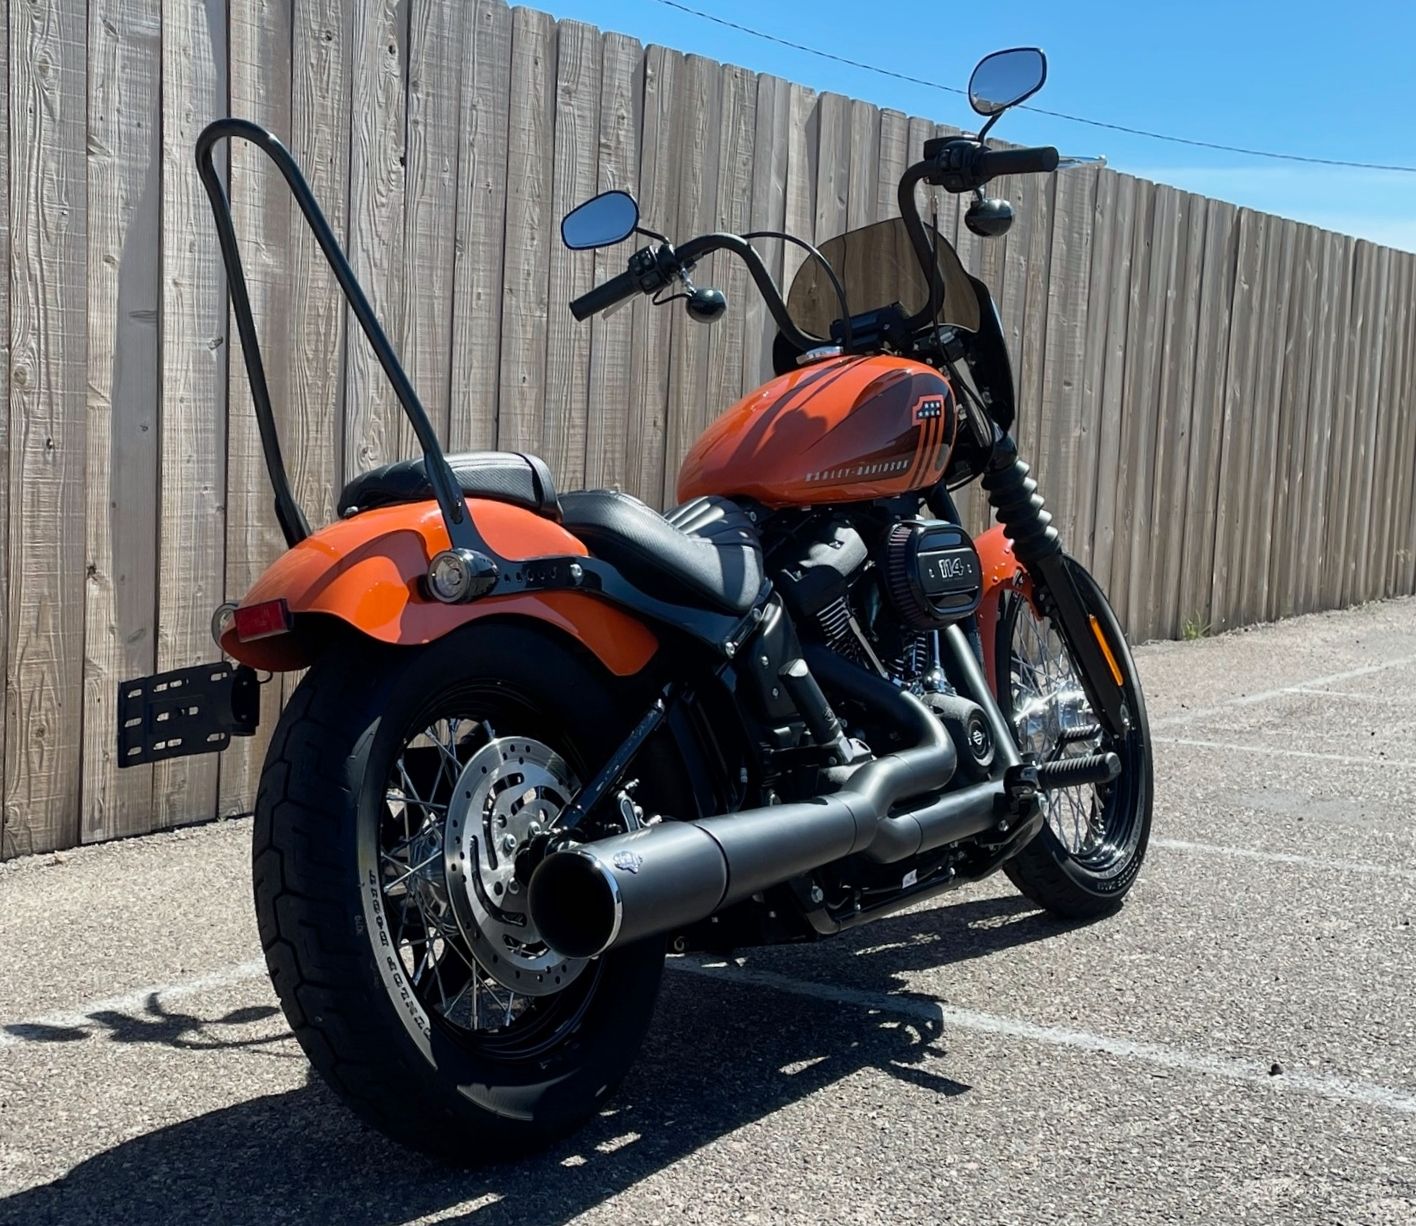 2021 Harley-Davidson Street Bob® 114 in Dodge City, Kansas - Photo 3